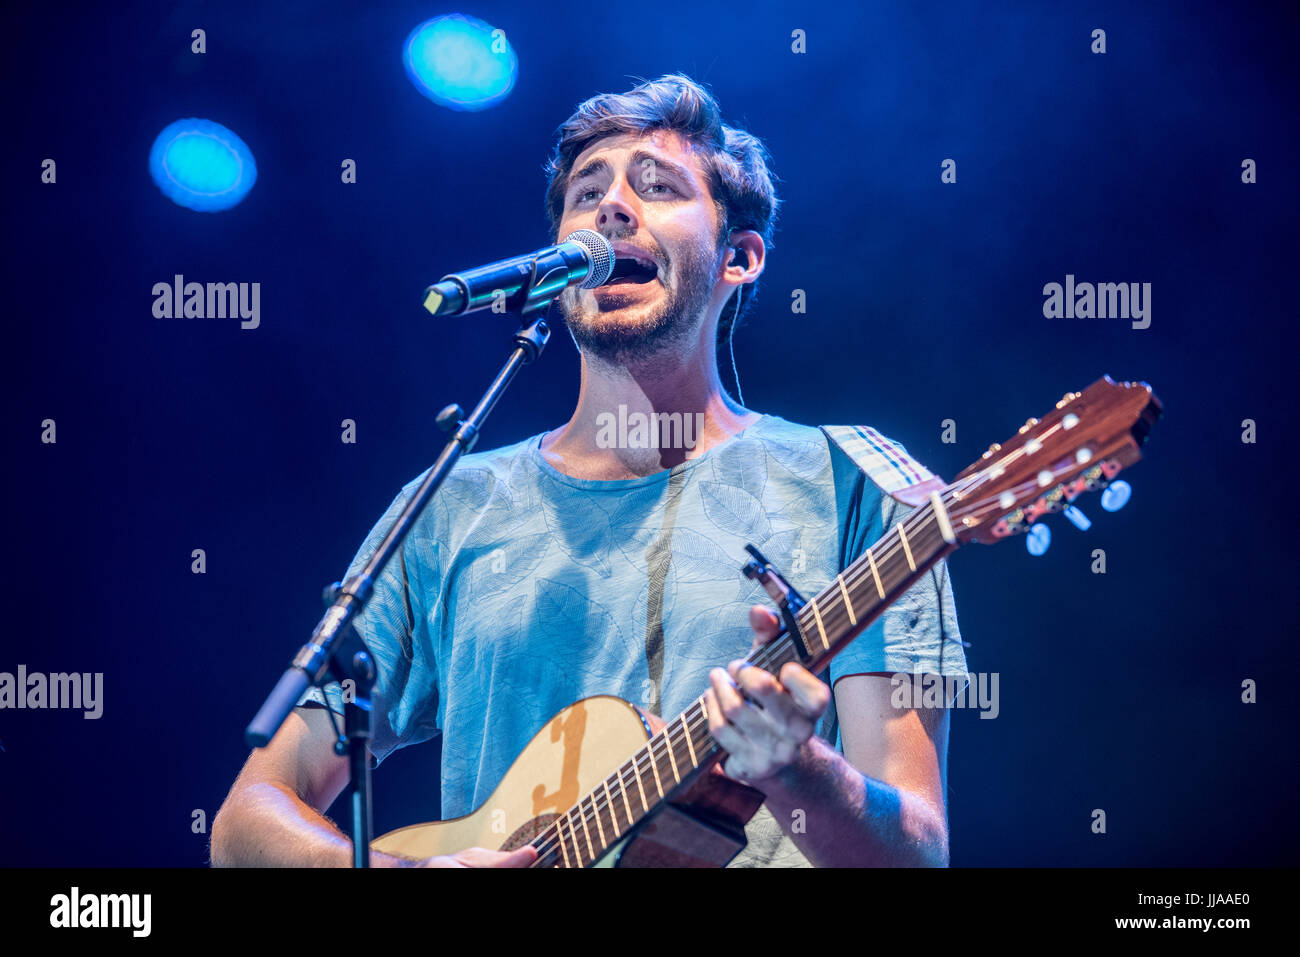 Grugliasco, UK. 18th July, 2017. The spanish pop singer Alvaro Soler performs at GruVilllage Festival in Grugliasco, a small city near Torino Credit: Alberto Gandolfo/Alamy Live News Stock Photo